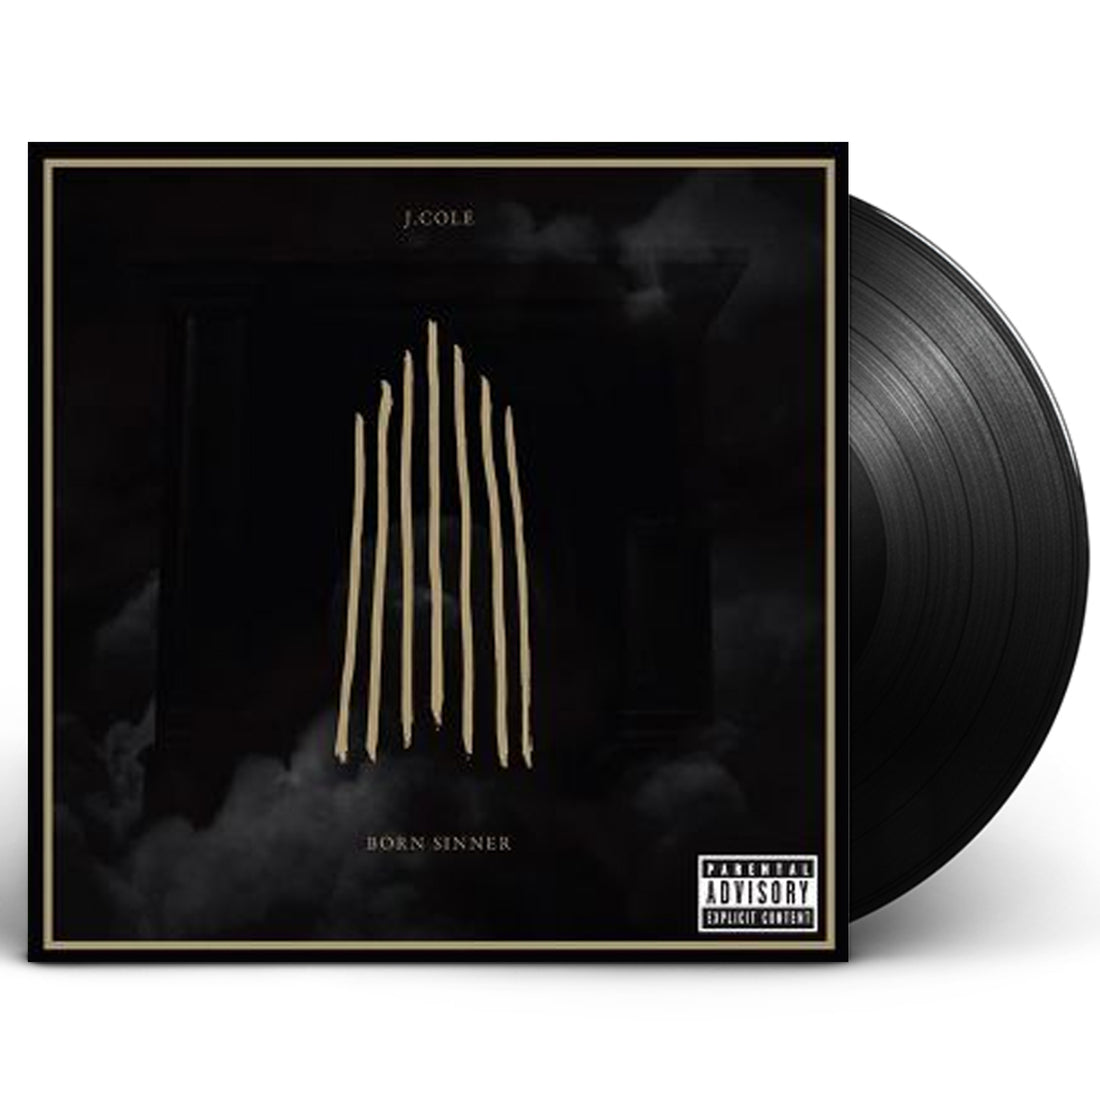 J. Cole "Born Sinner" 2xLP Vinyl